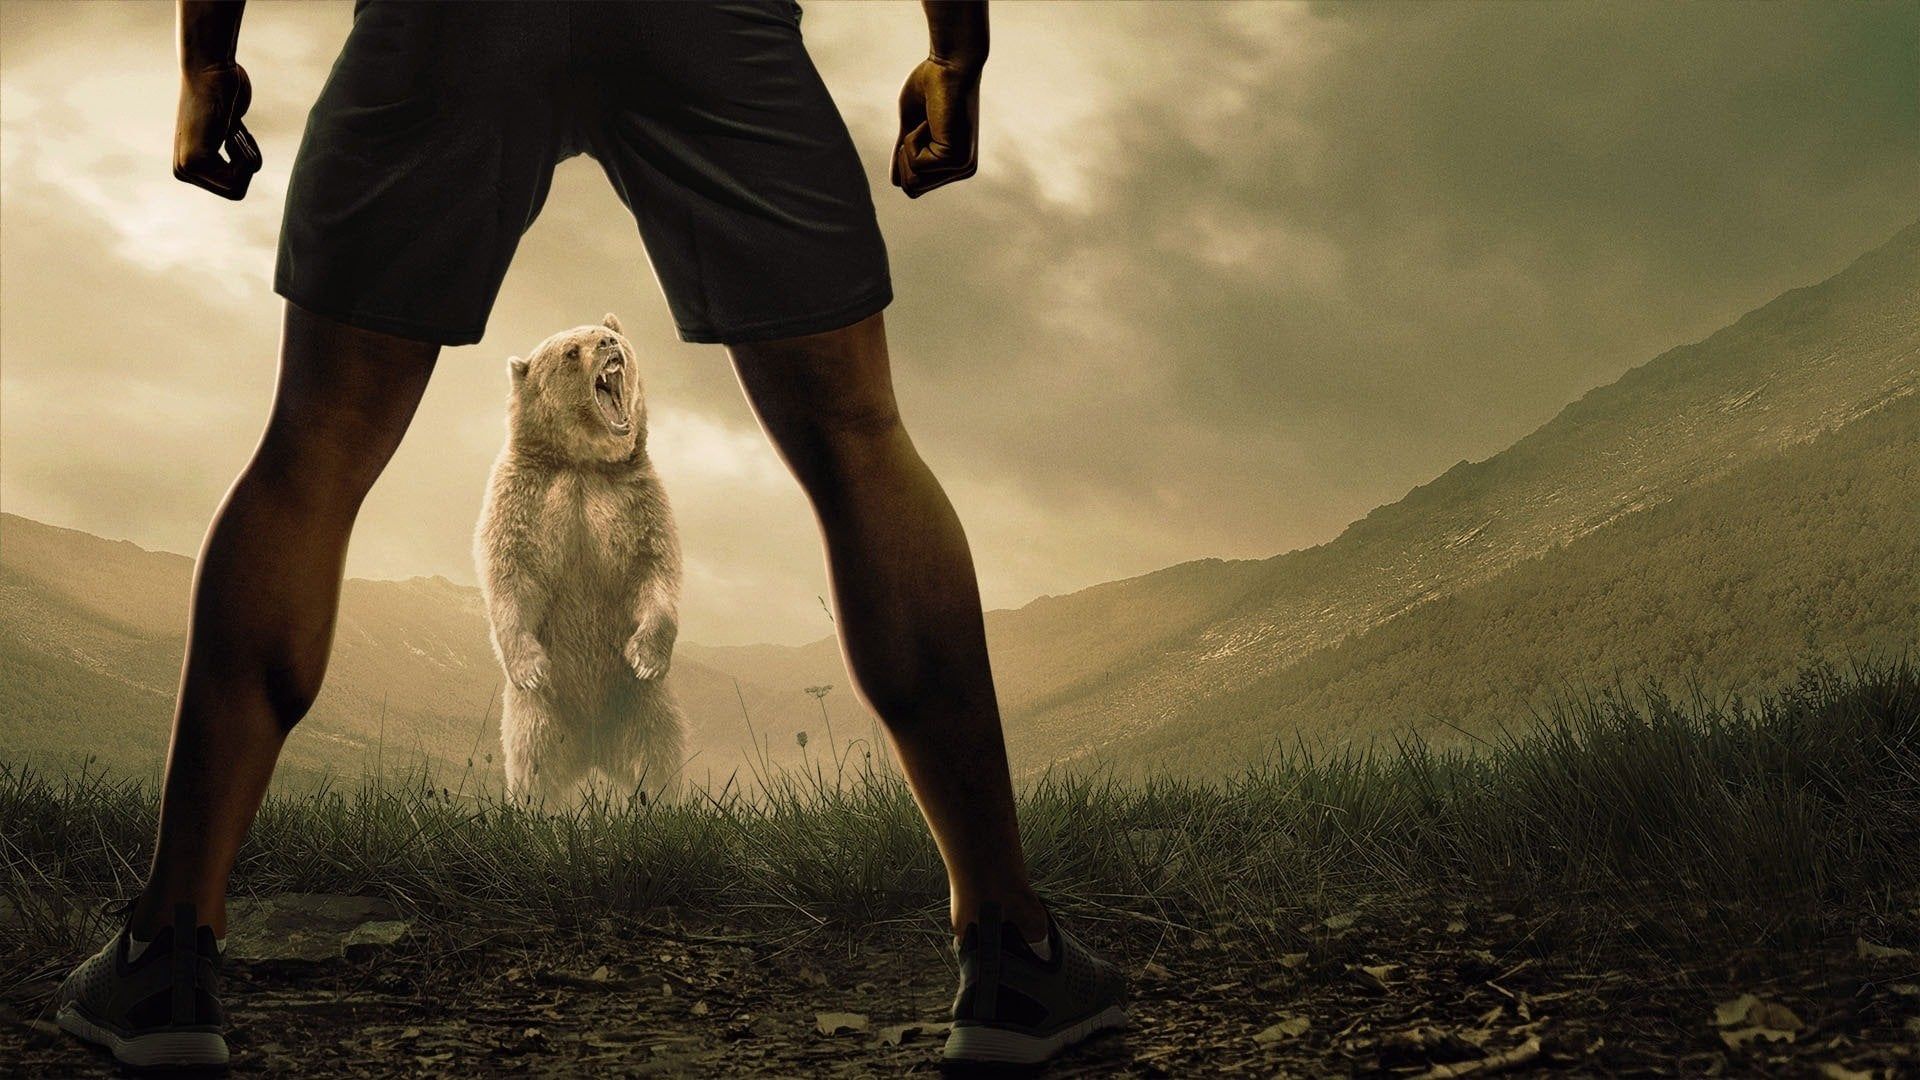 Man vs Bear background